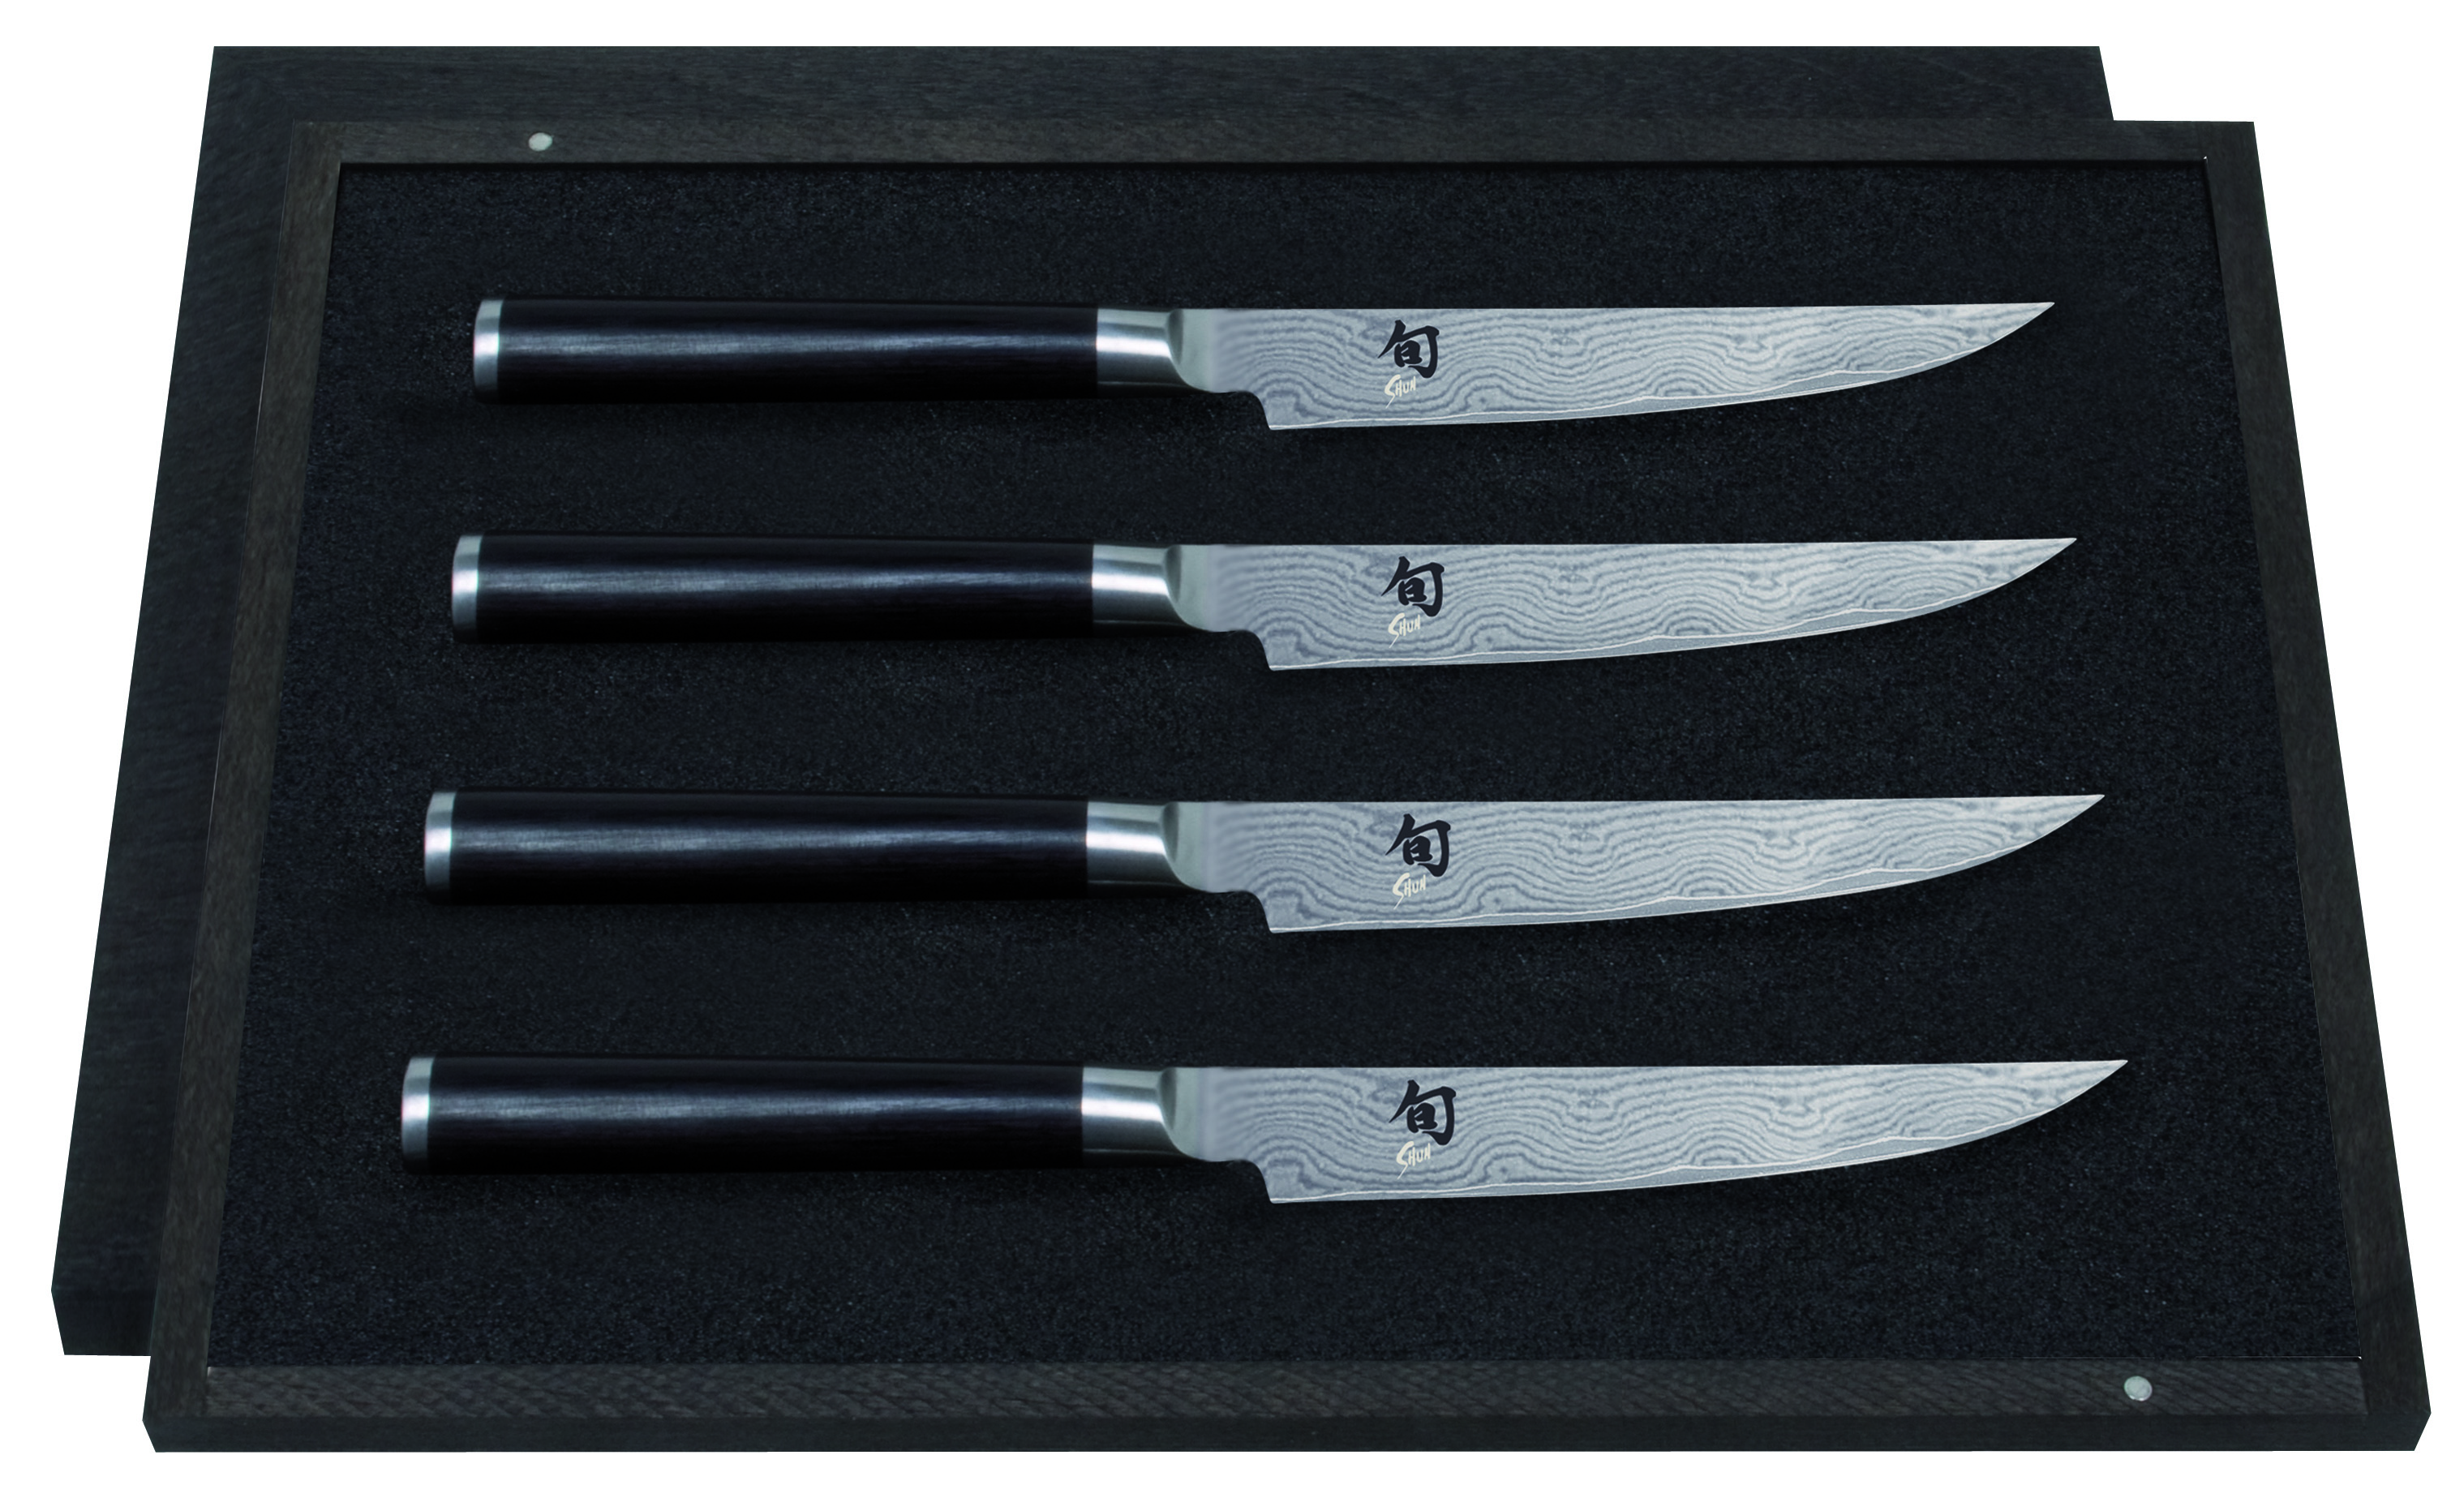 KAI Shun Classic 4-teiliges Steakmesser-Set 12 cm - Damaststahl - Griff Pakkaholz